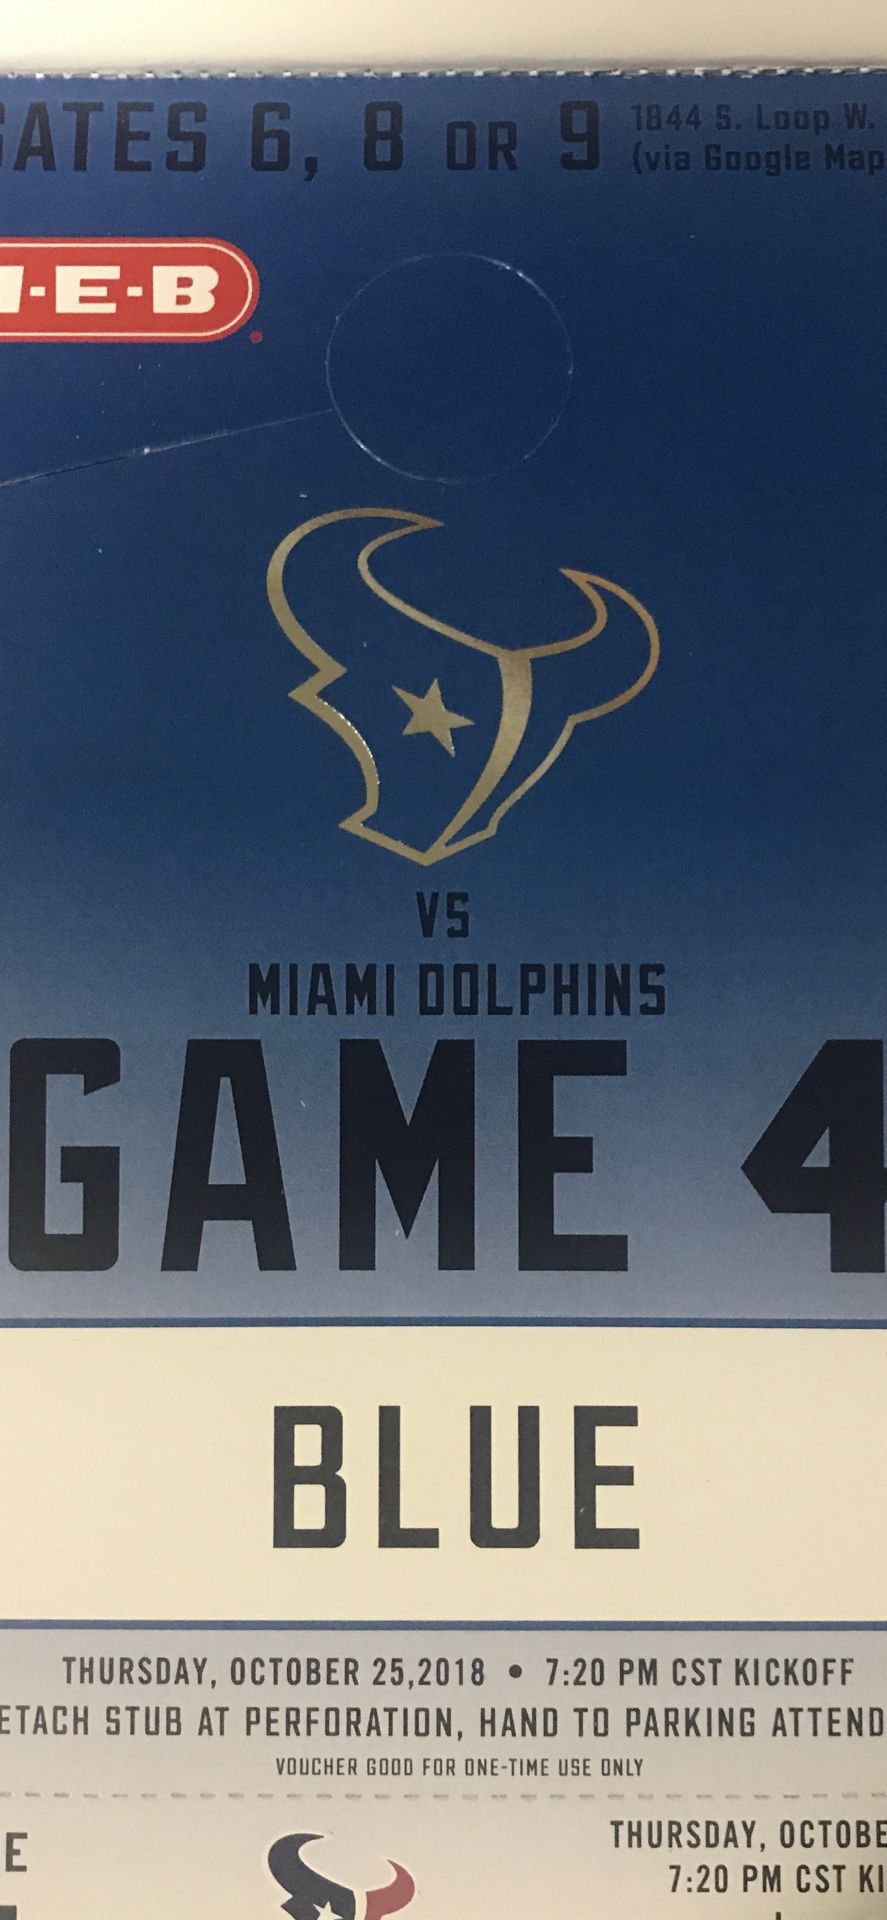 Texans vs Dolphins Blue parking pass